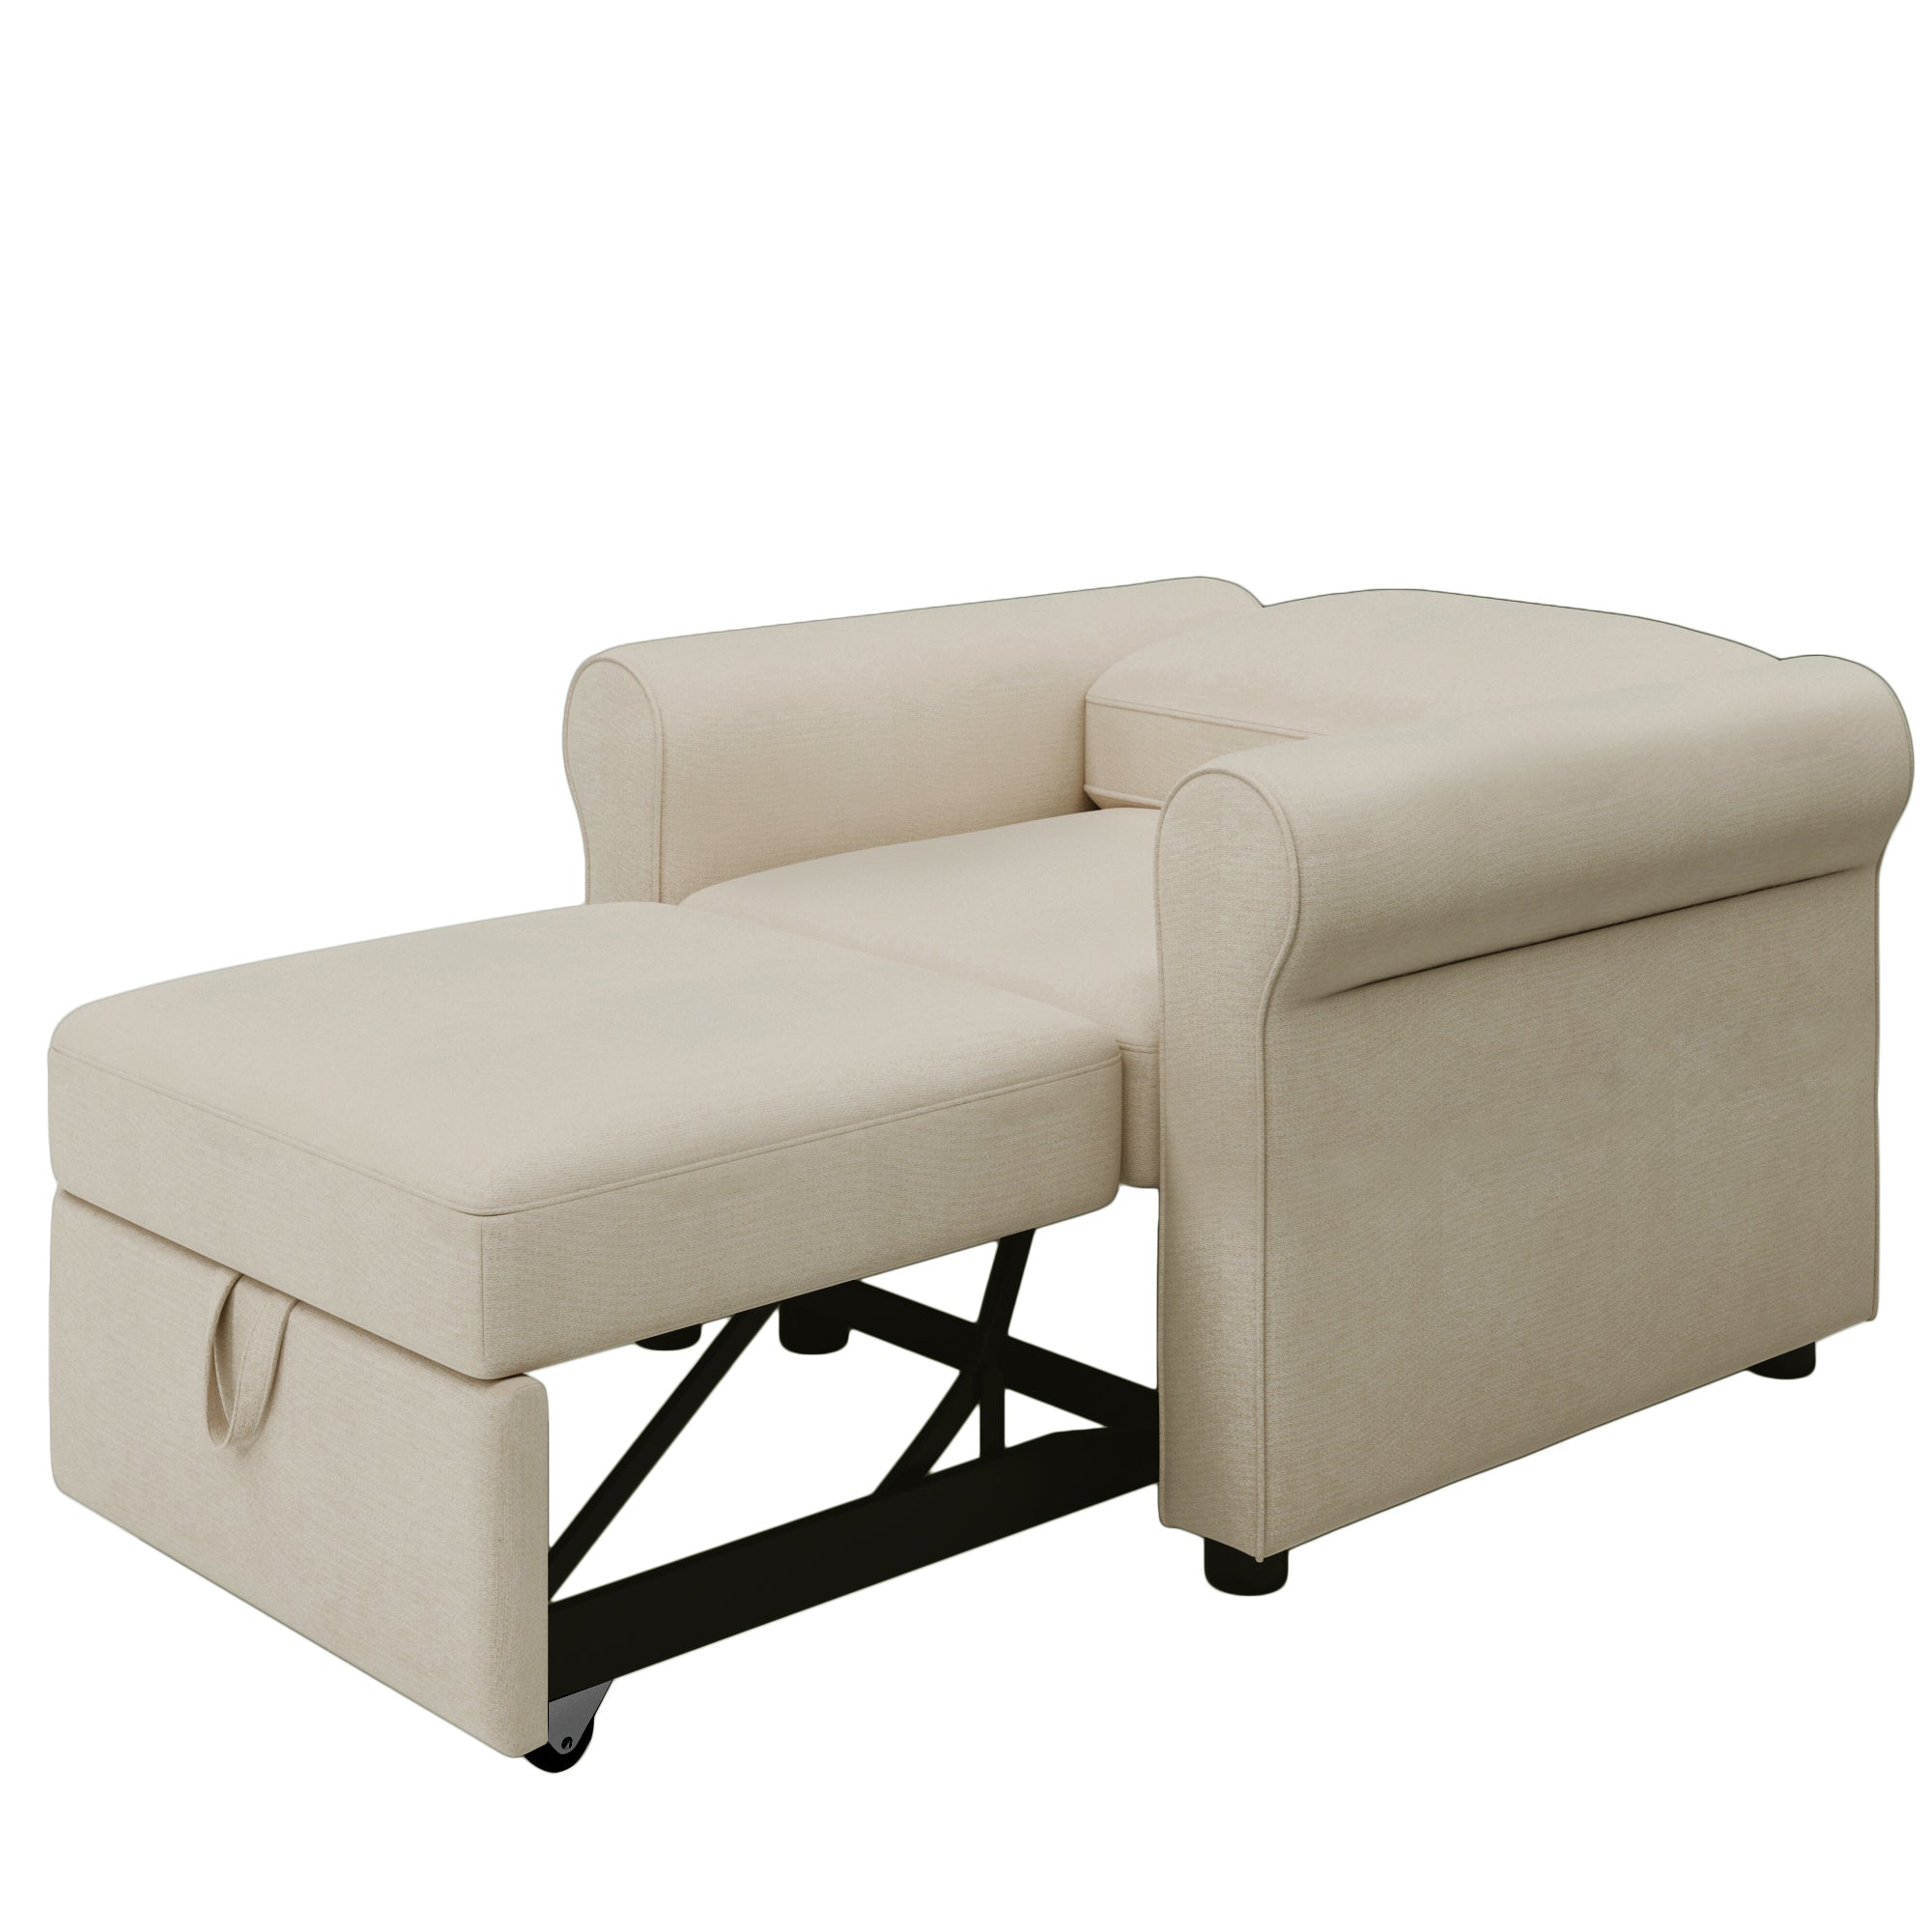 3 in 1 Sofa Bed Chair, Convertible Sleeper Chair beige-linen